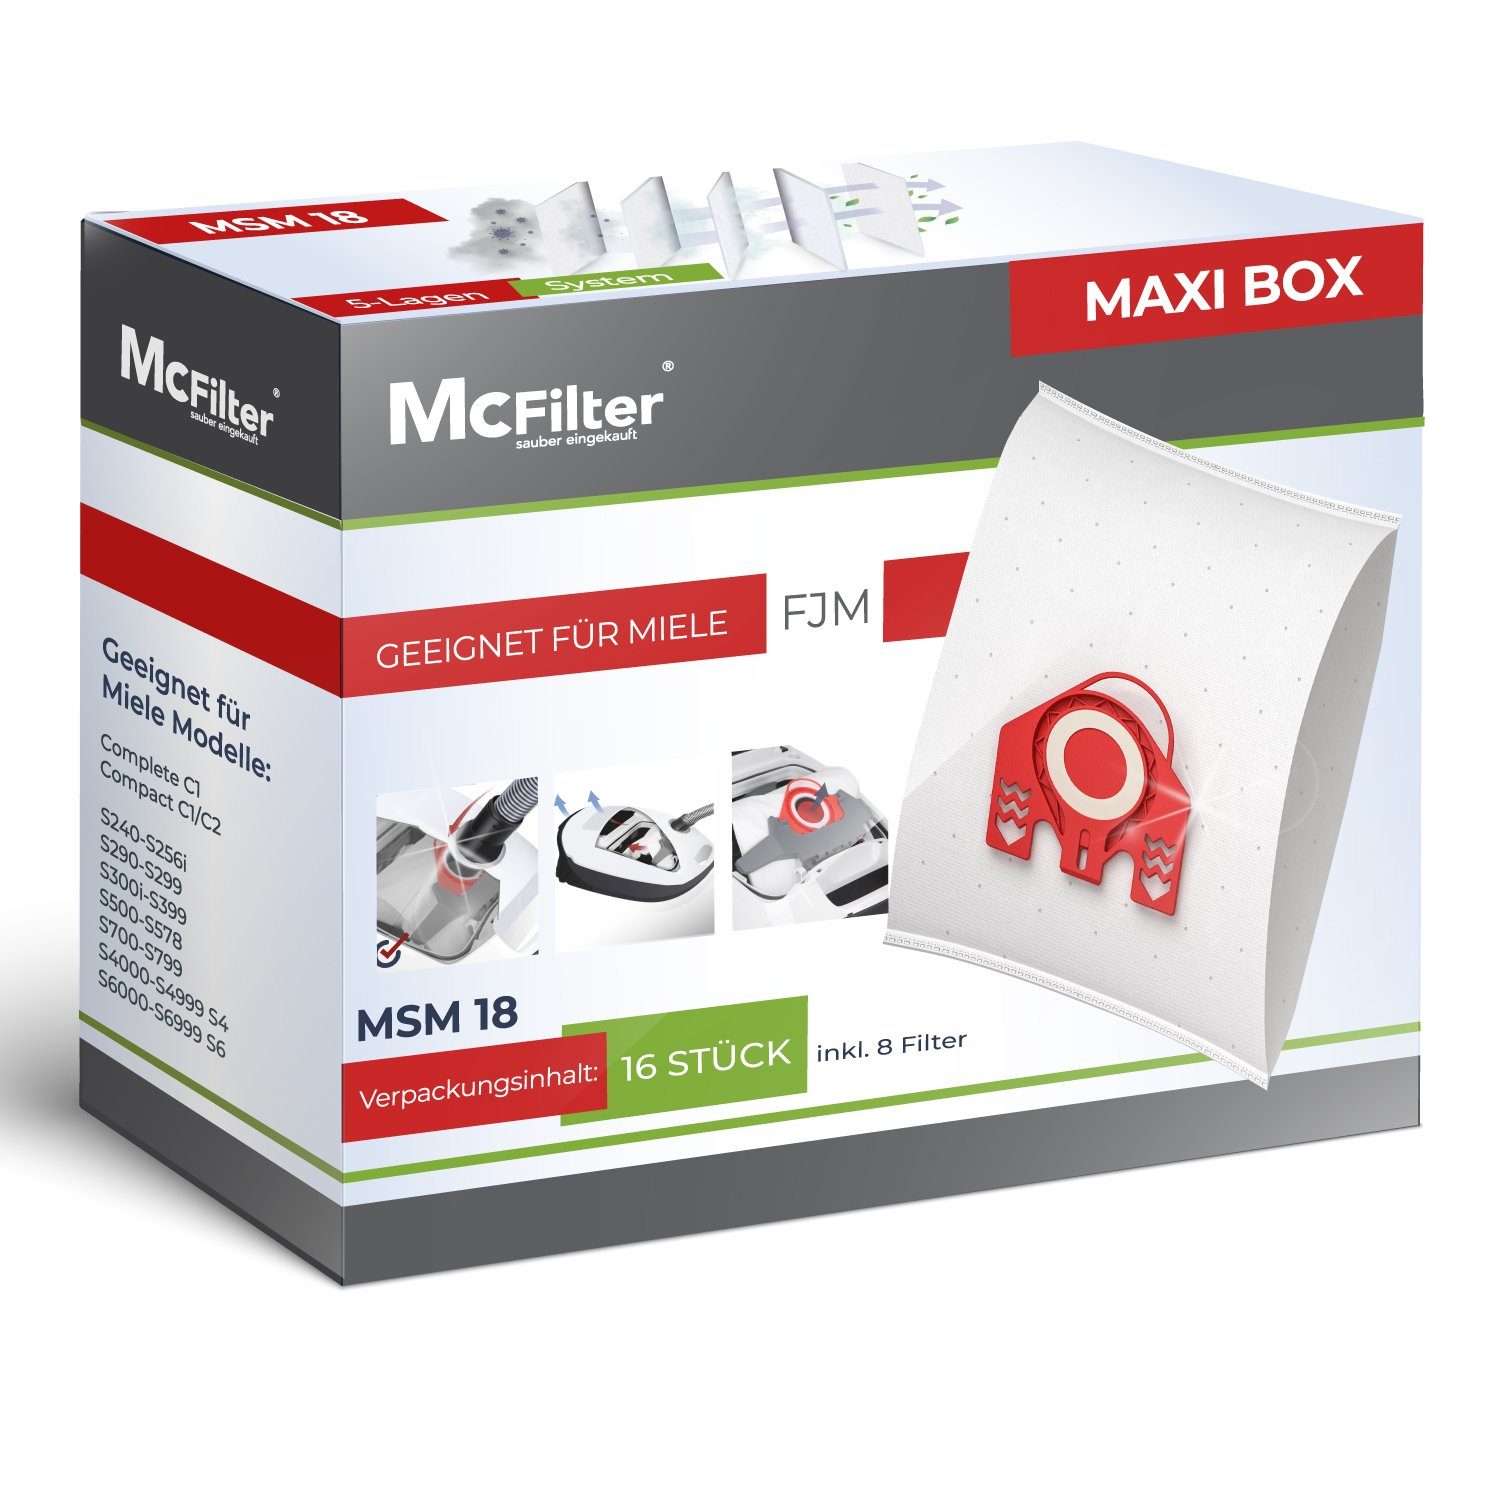 McFilter Staubsaugerbeutel MAXI 9917710, für S548 Top Plus, BOX 16+8, Alternative 10408420 Miele Filter, 16 inkl. St., S512-1, 8 wie S511, passend Miele zu